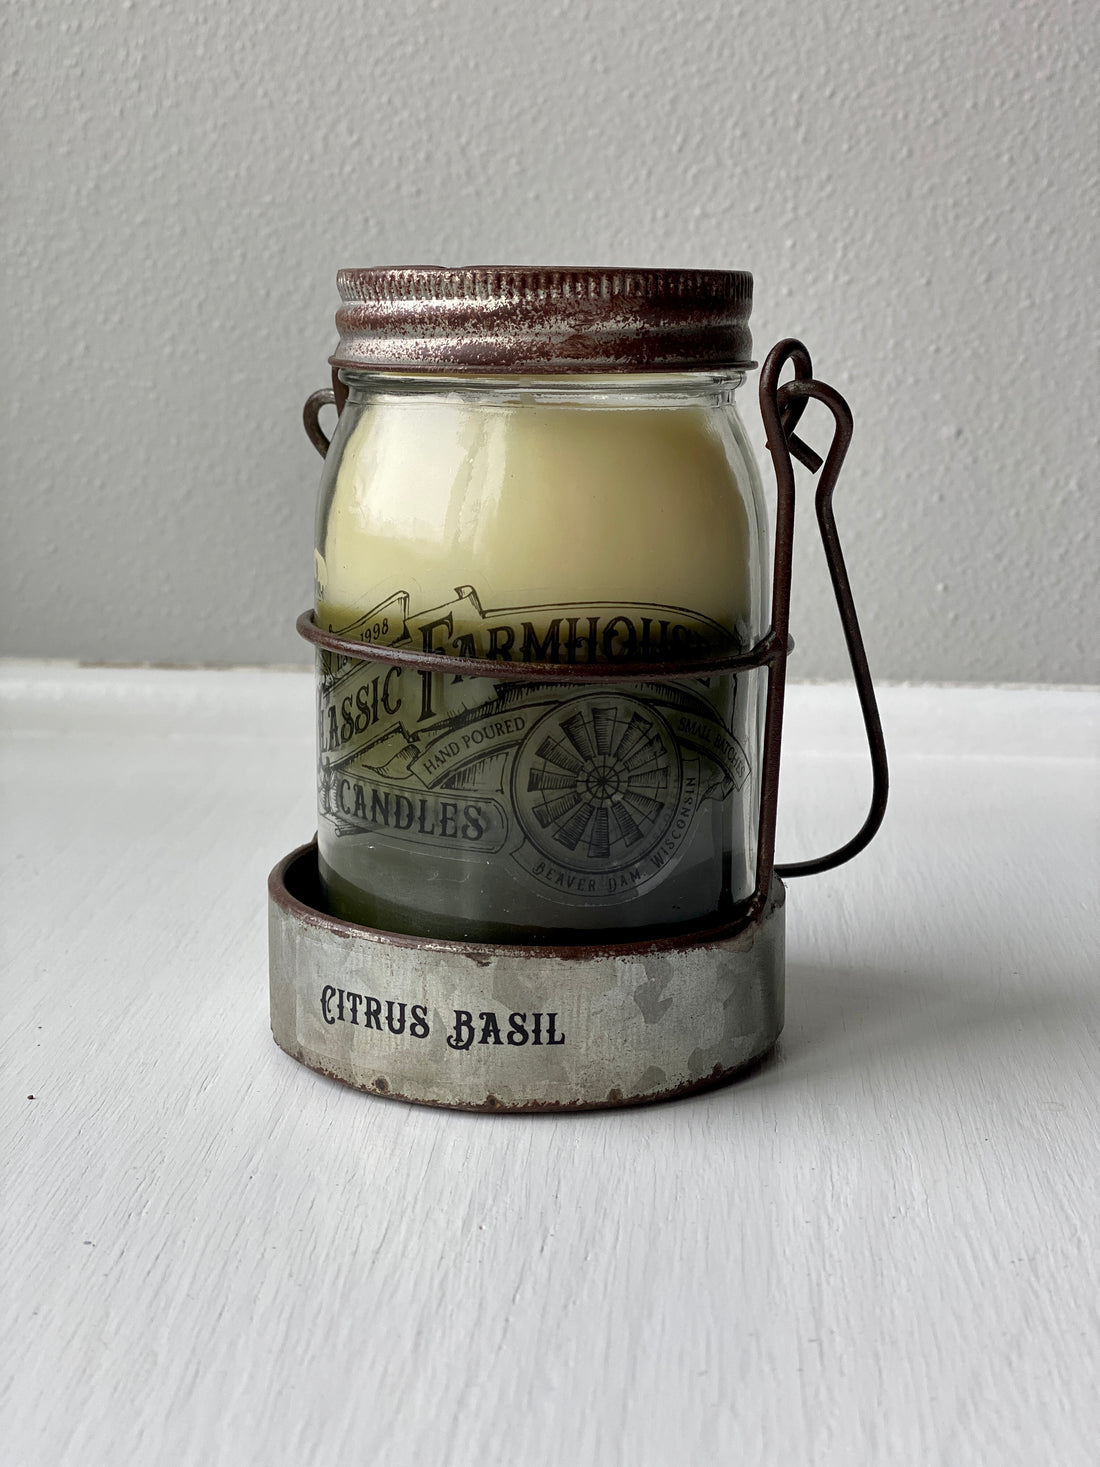 Classic Farmhouse Star Candle - Citrus Basil